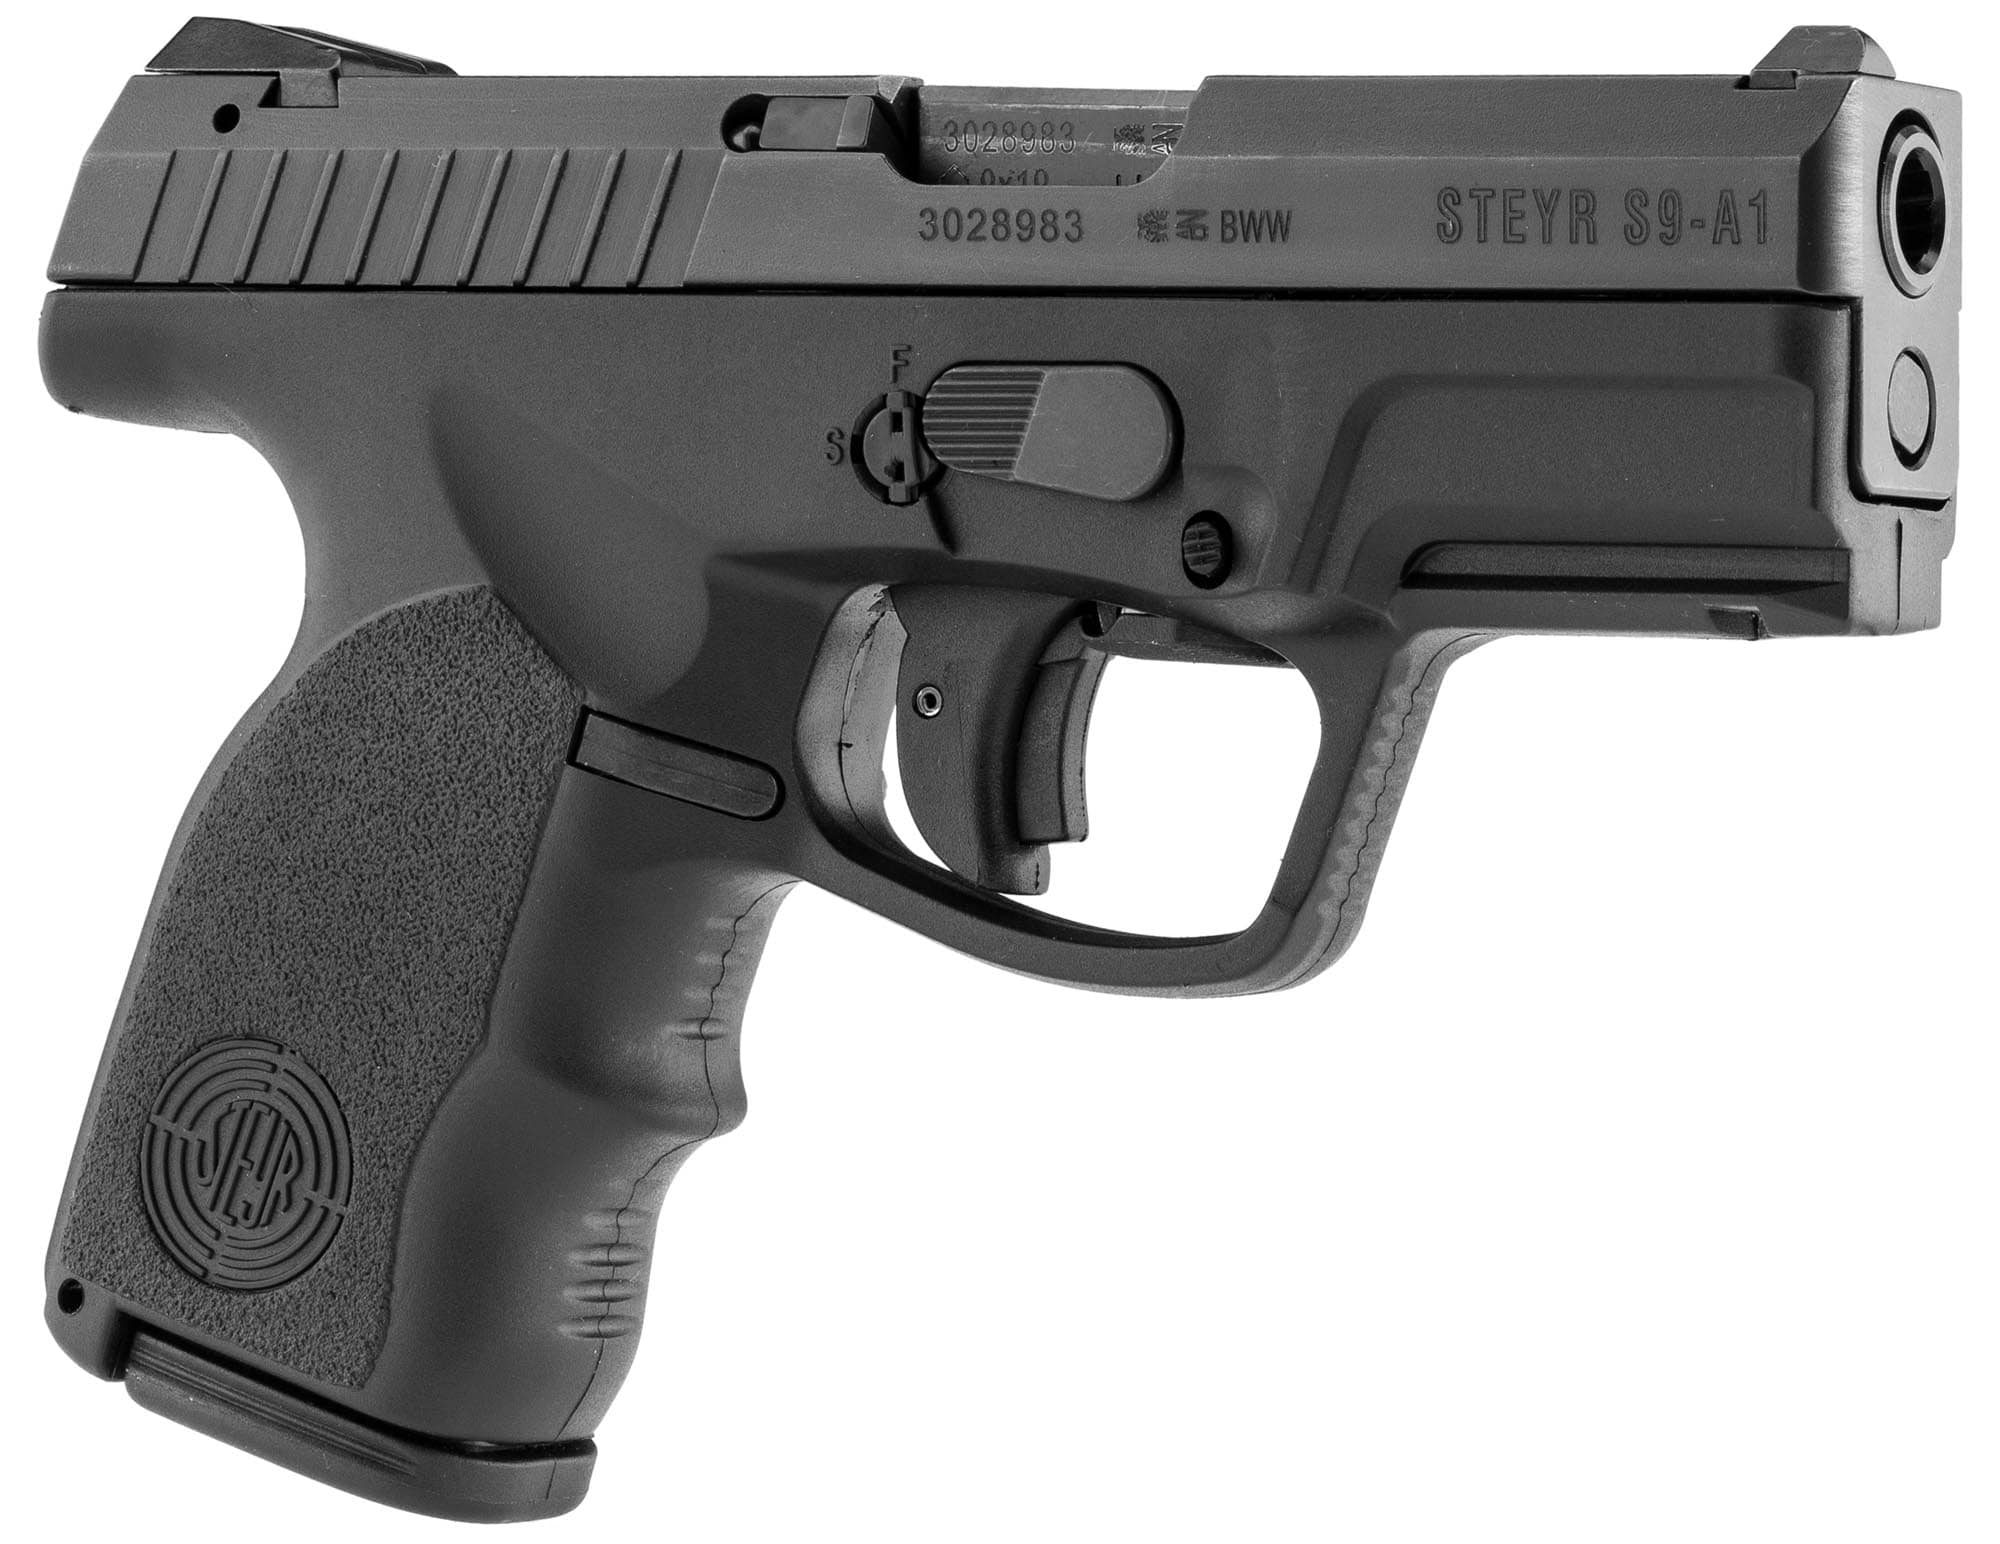 ST2200-Pistolet Steyr compact S9-A1 - SAS9